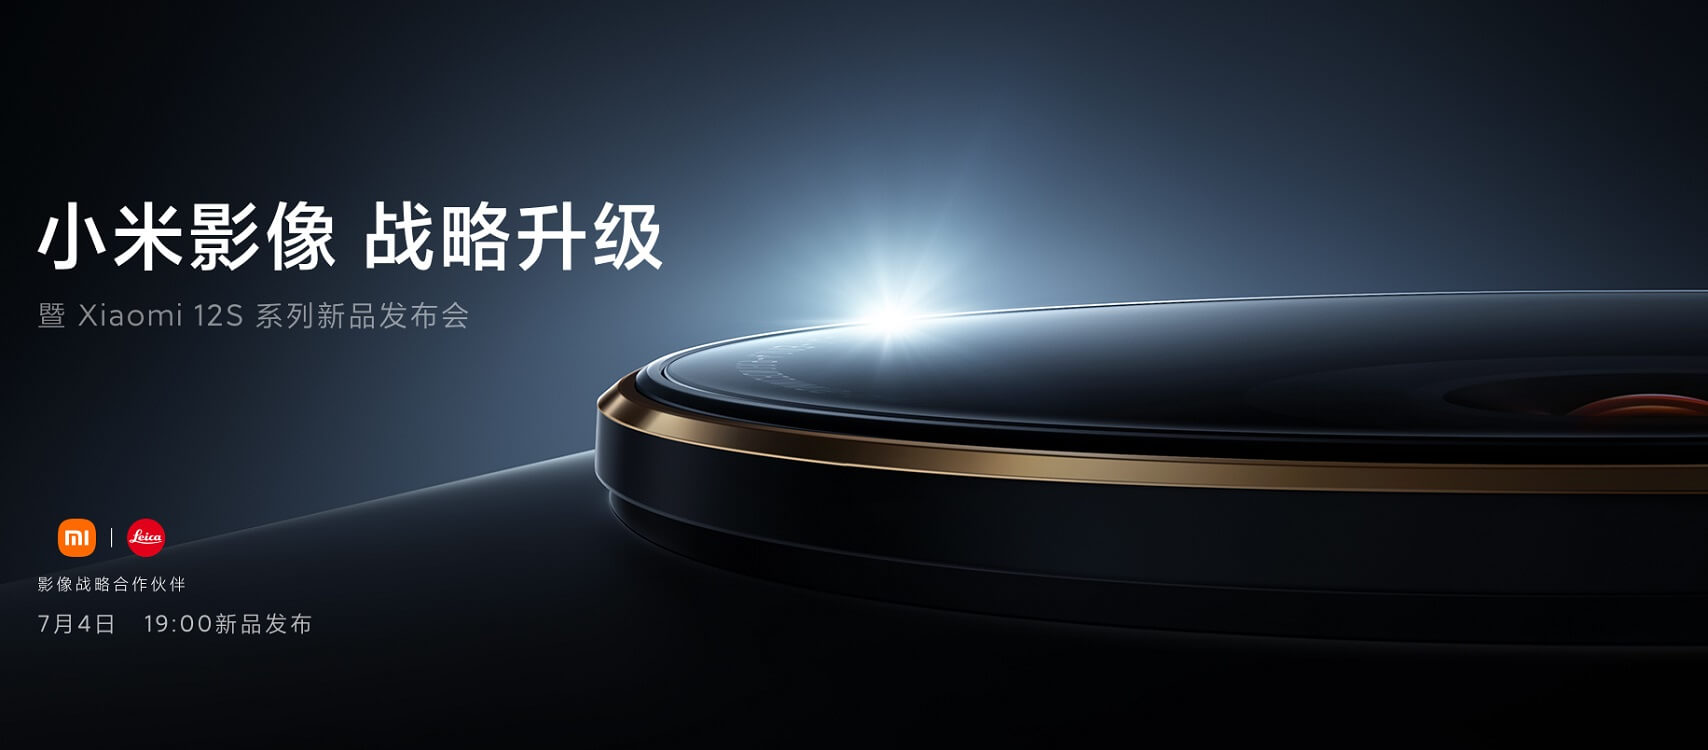 Xiaomi 12S series launch invite cn